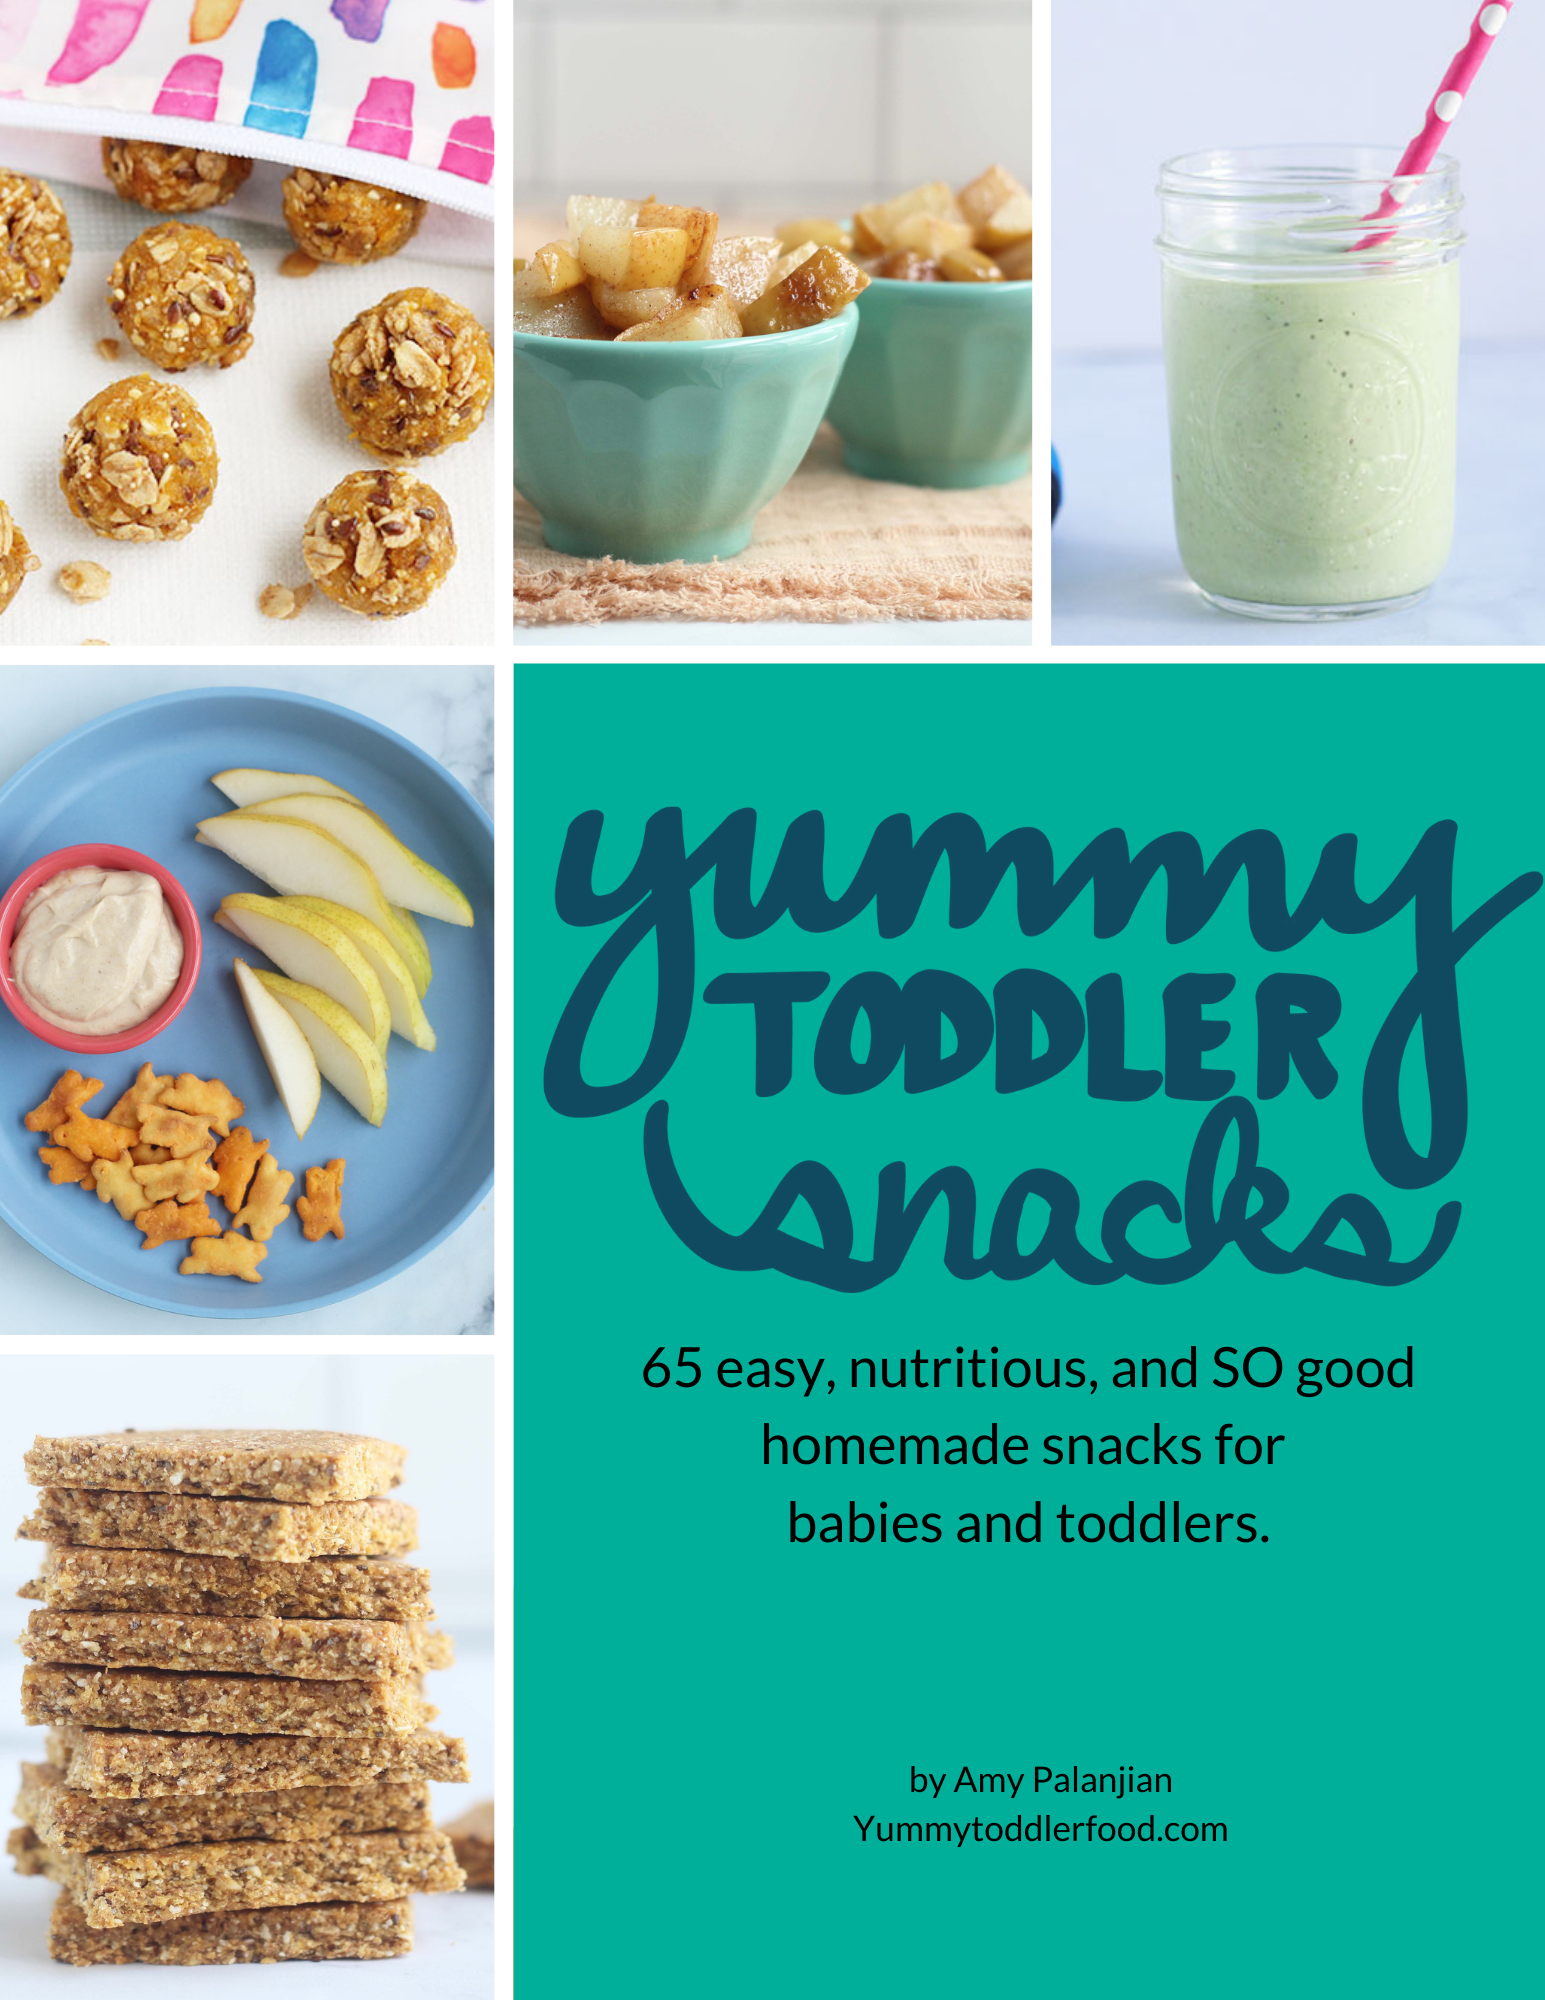 Sale on toddler snacks and finger foods